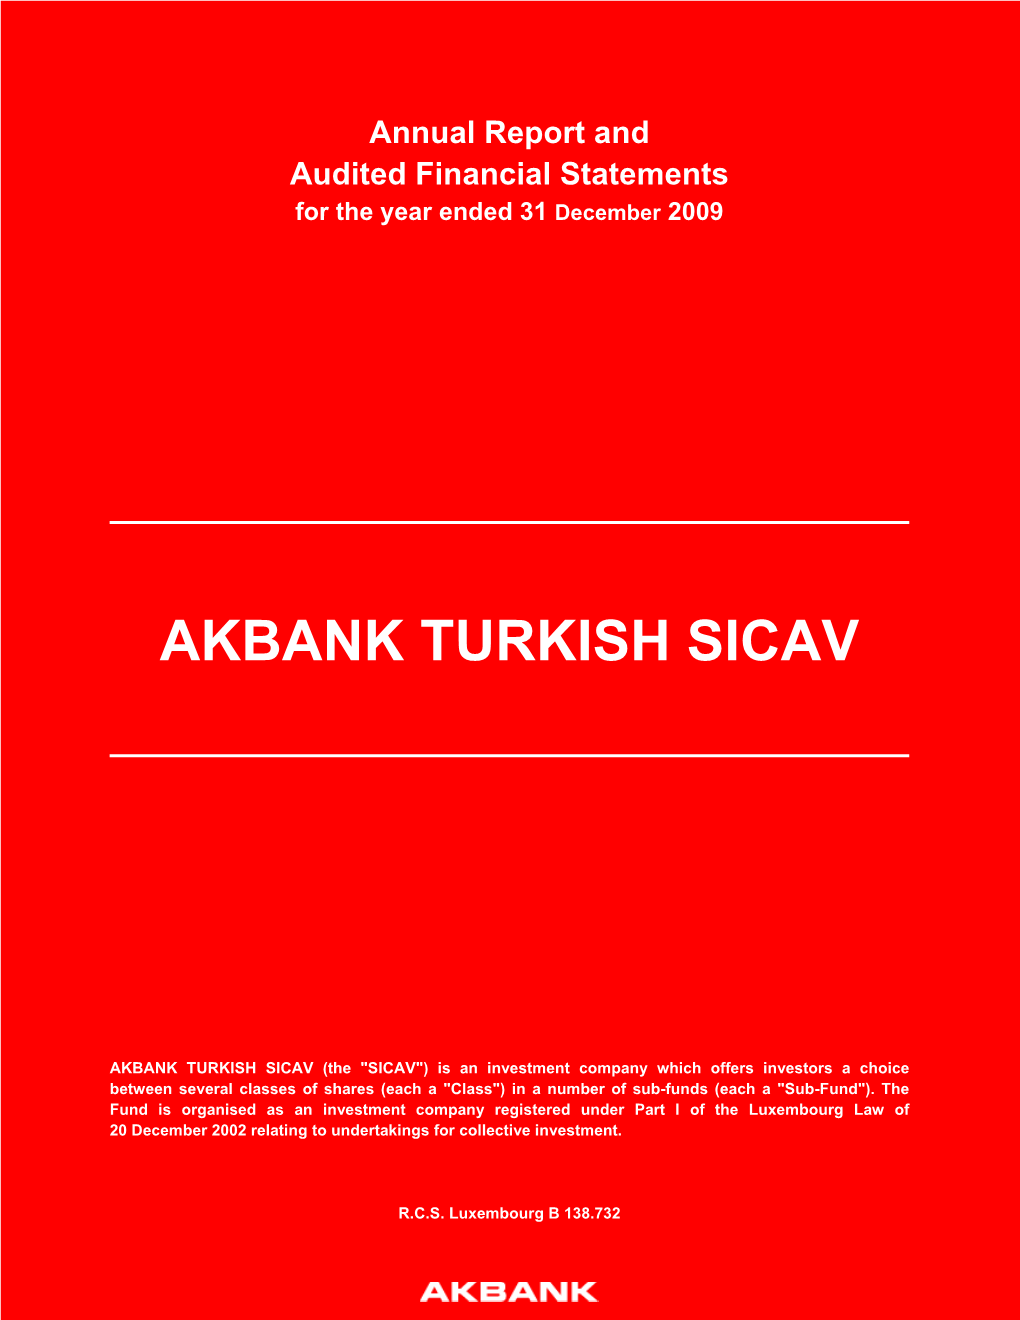 Akbank Turkish Sicav